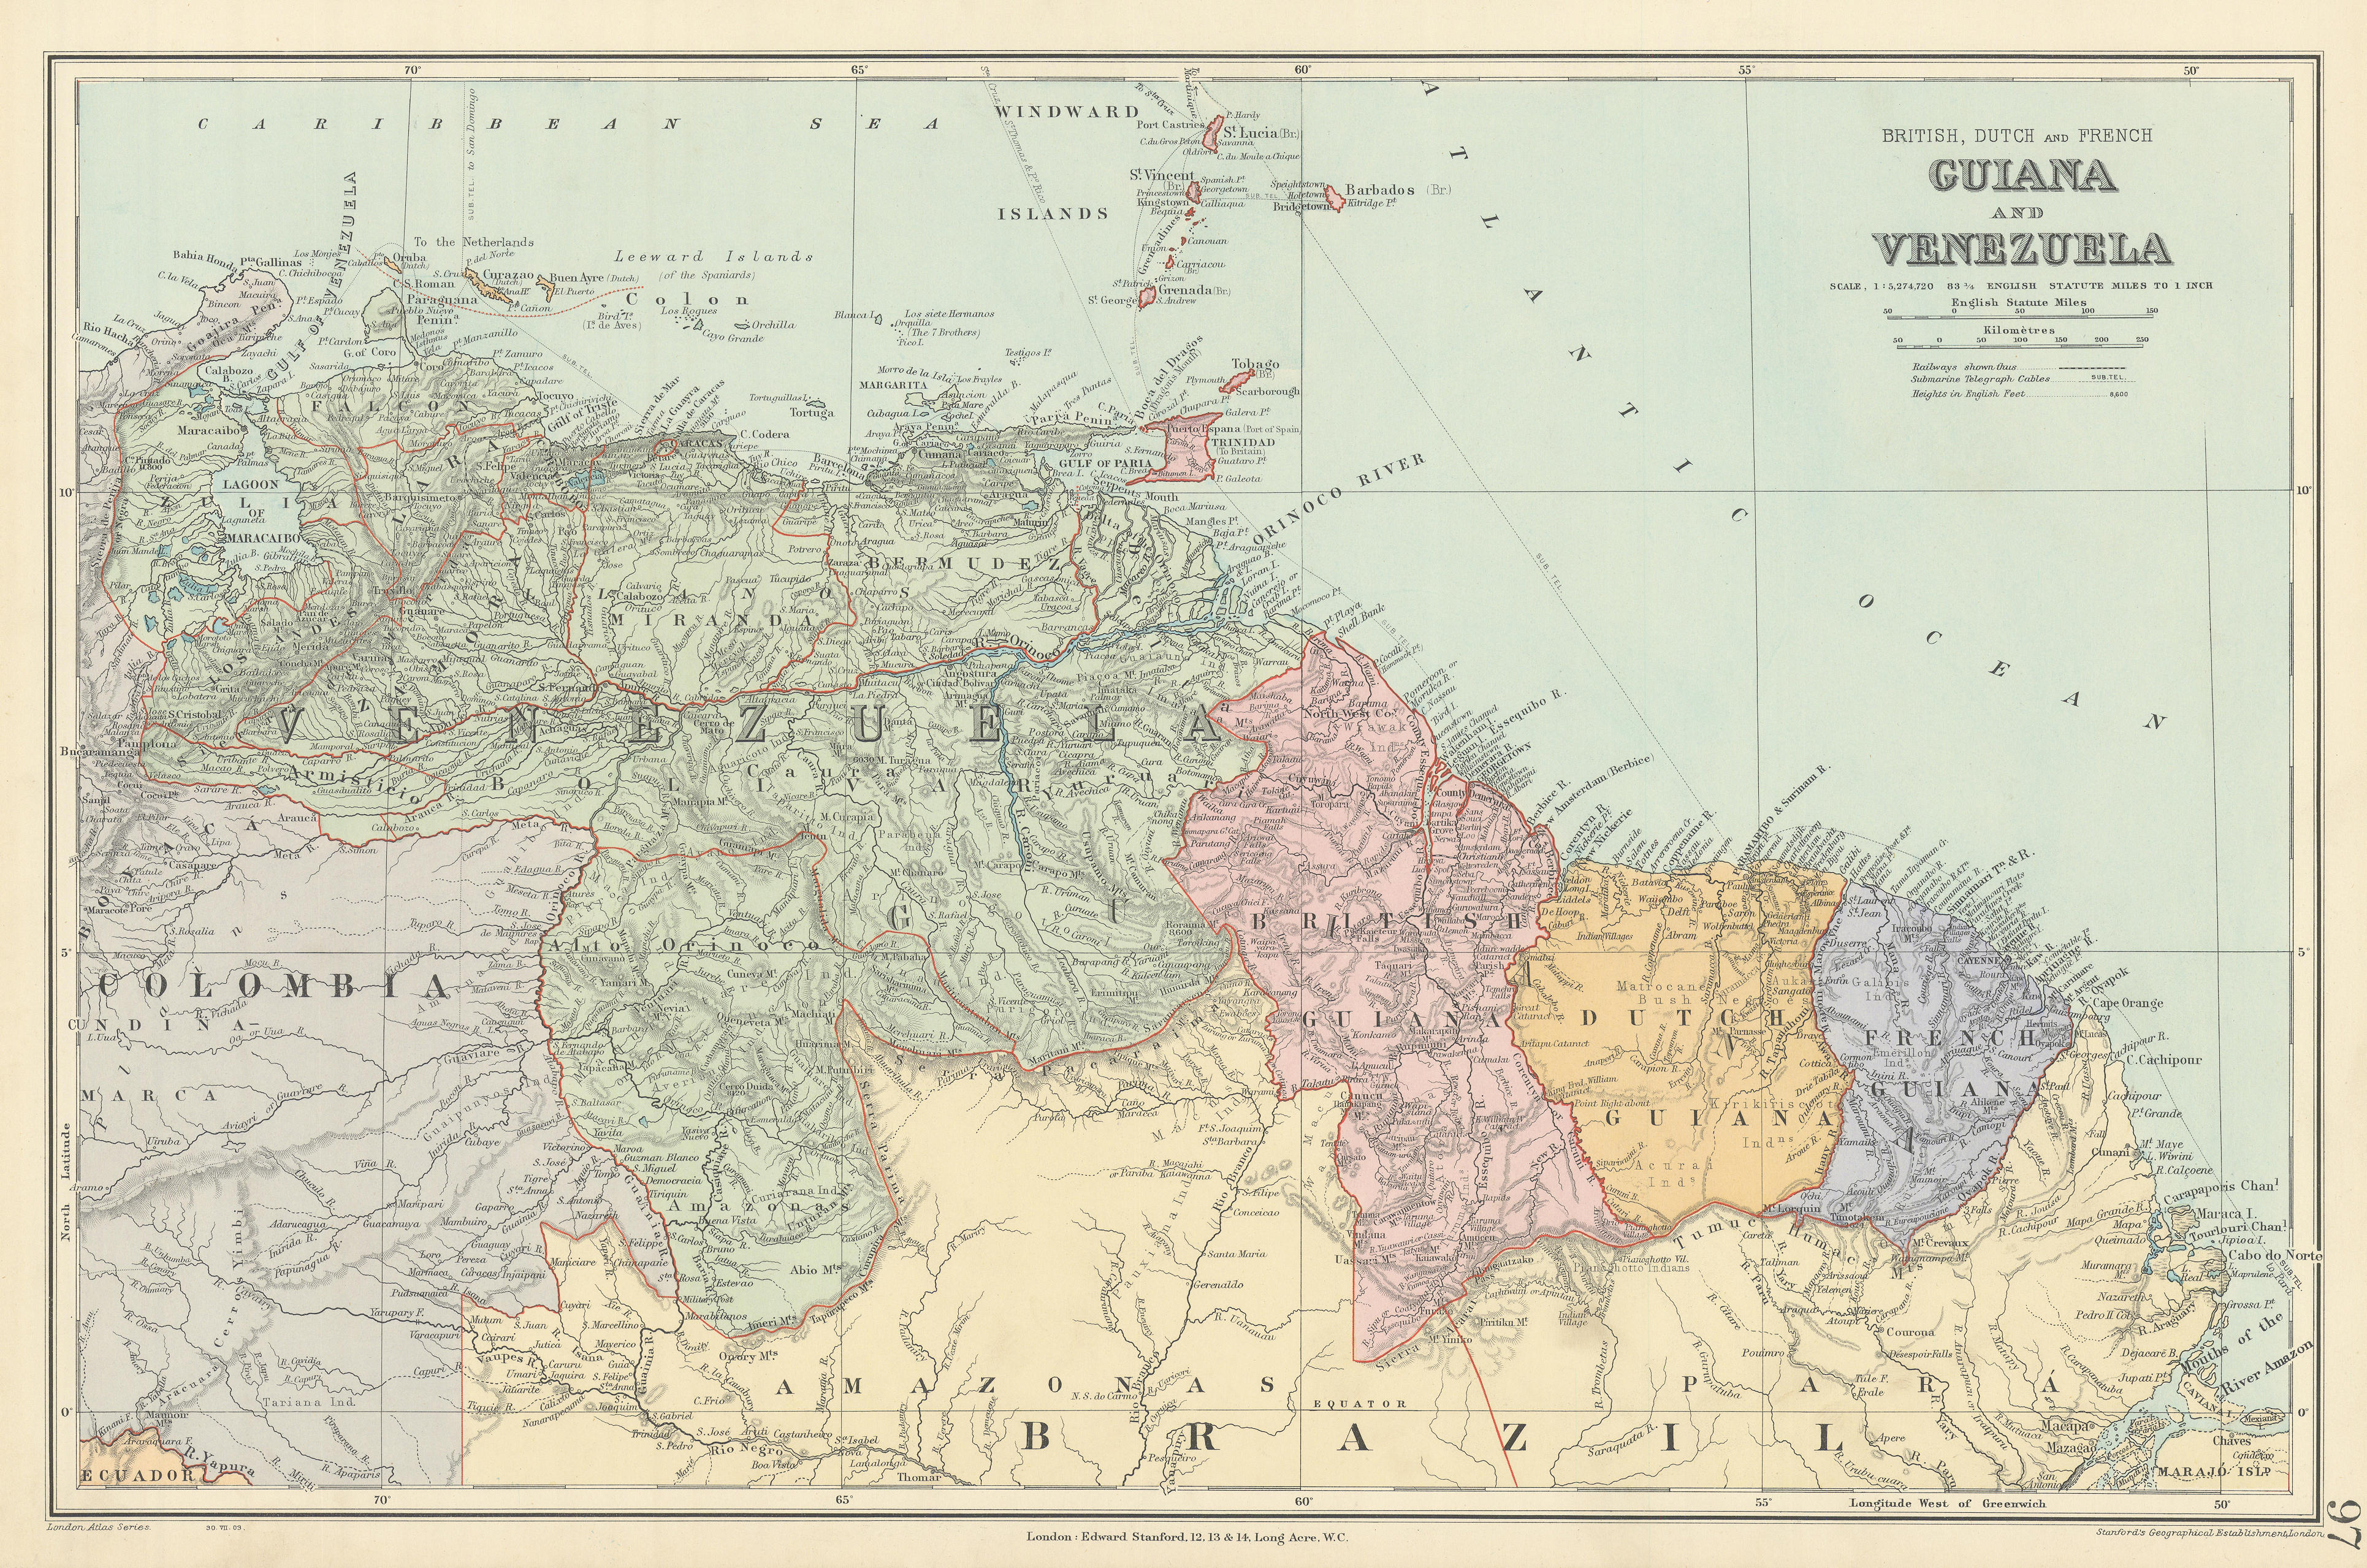 Associate Product Venezuela. British, Dutch & French Guiana. Guyana. Suriname. STANFORD 1904 map